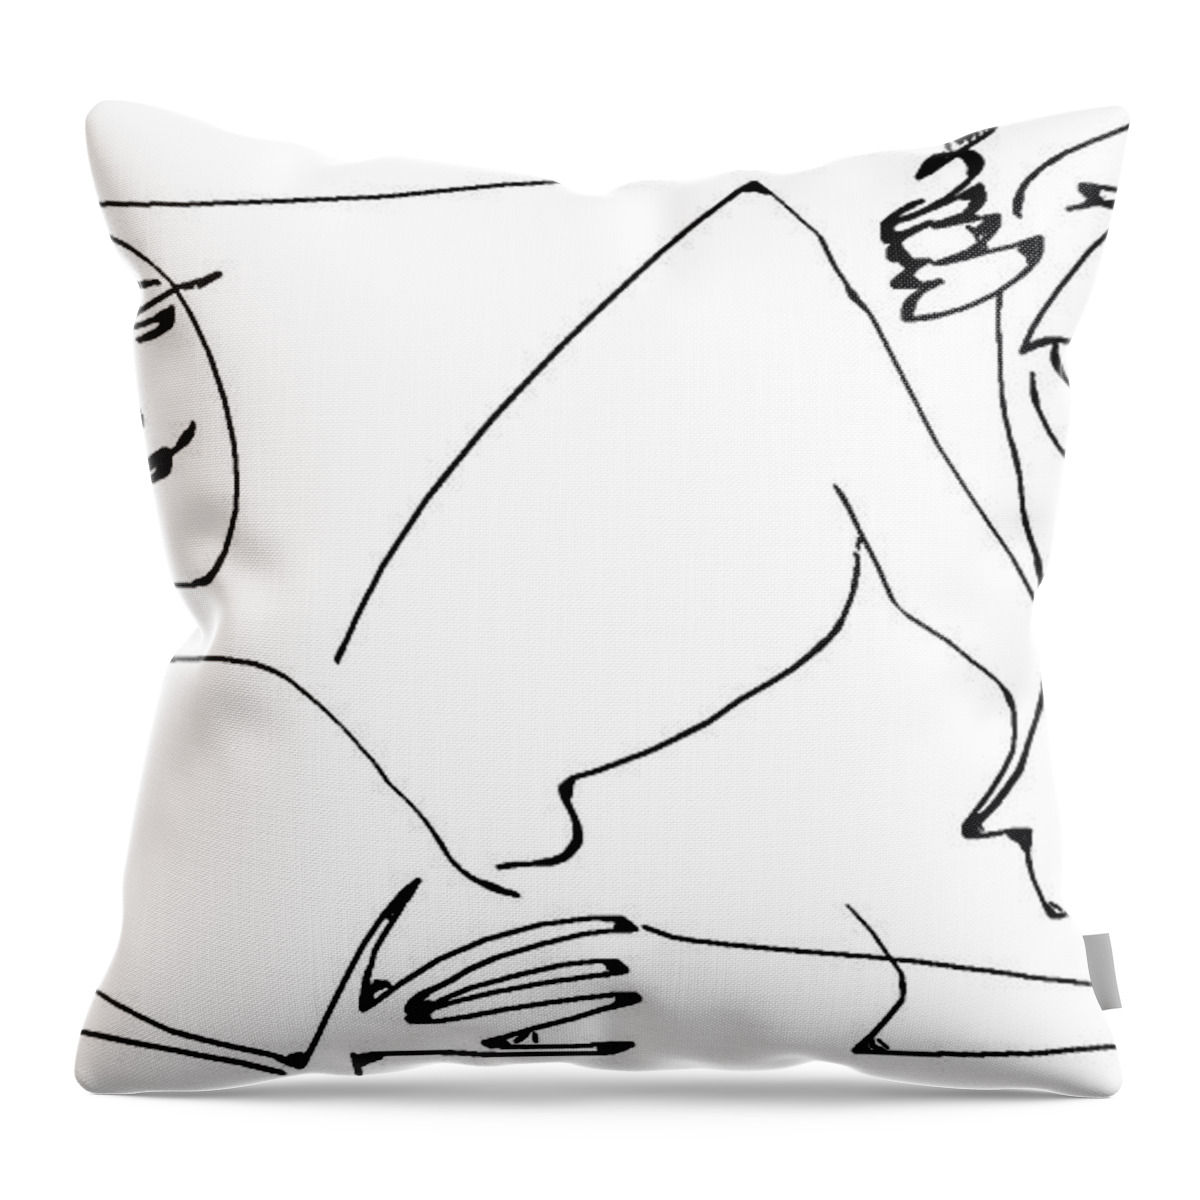  Throw Pillow featuring the digital art Hide And Seek by Doug Duffey